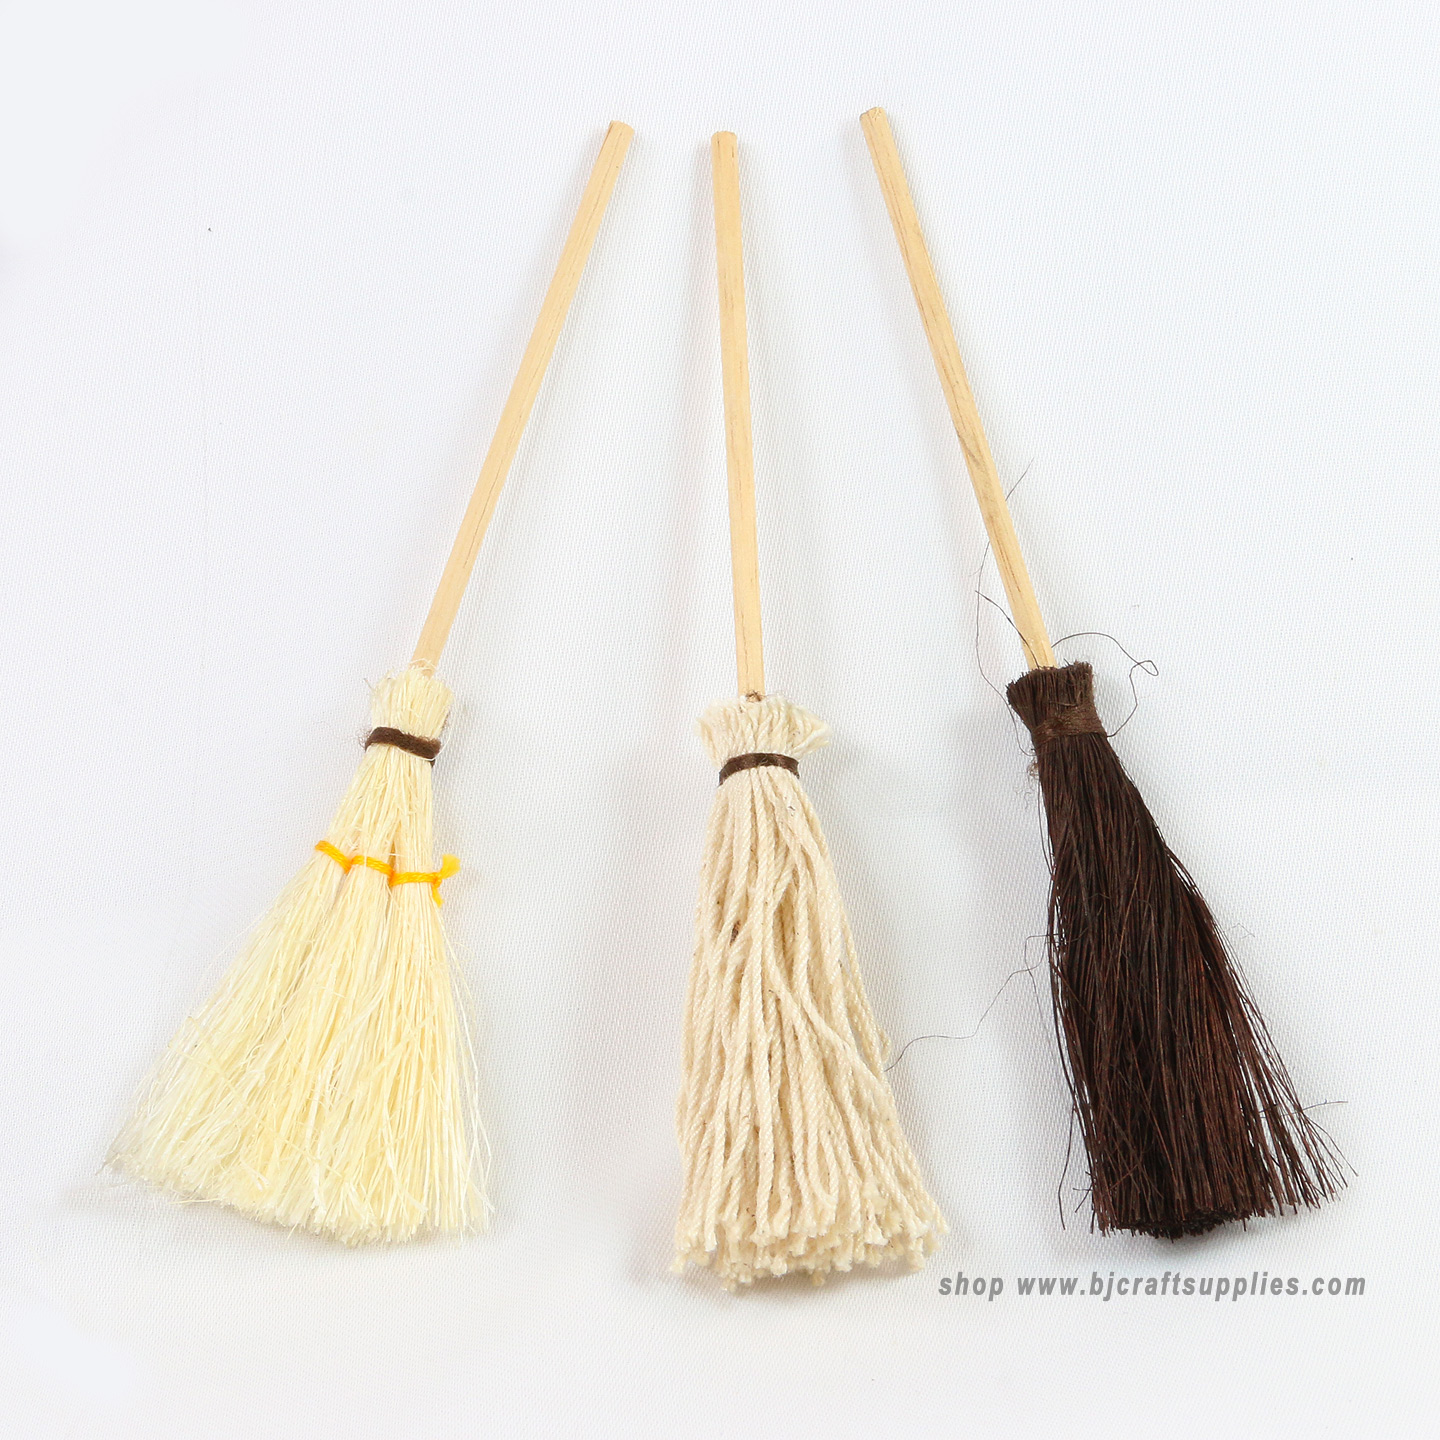 Craft Brooms - Miniature Brooms